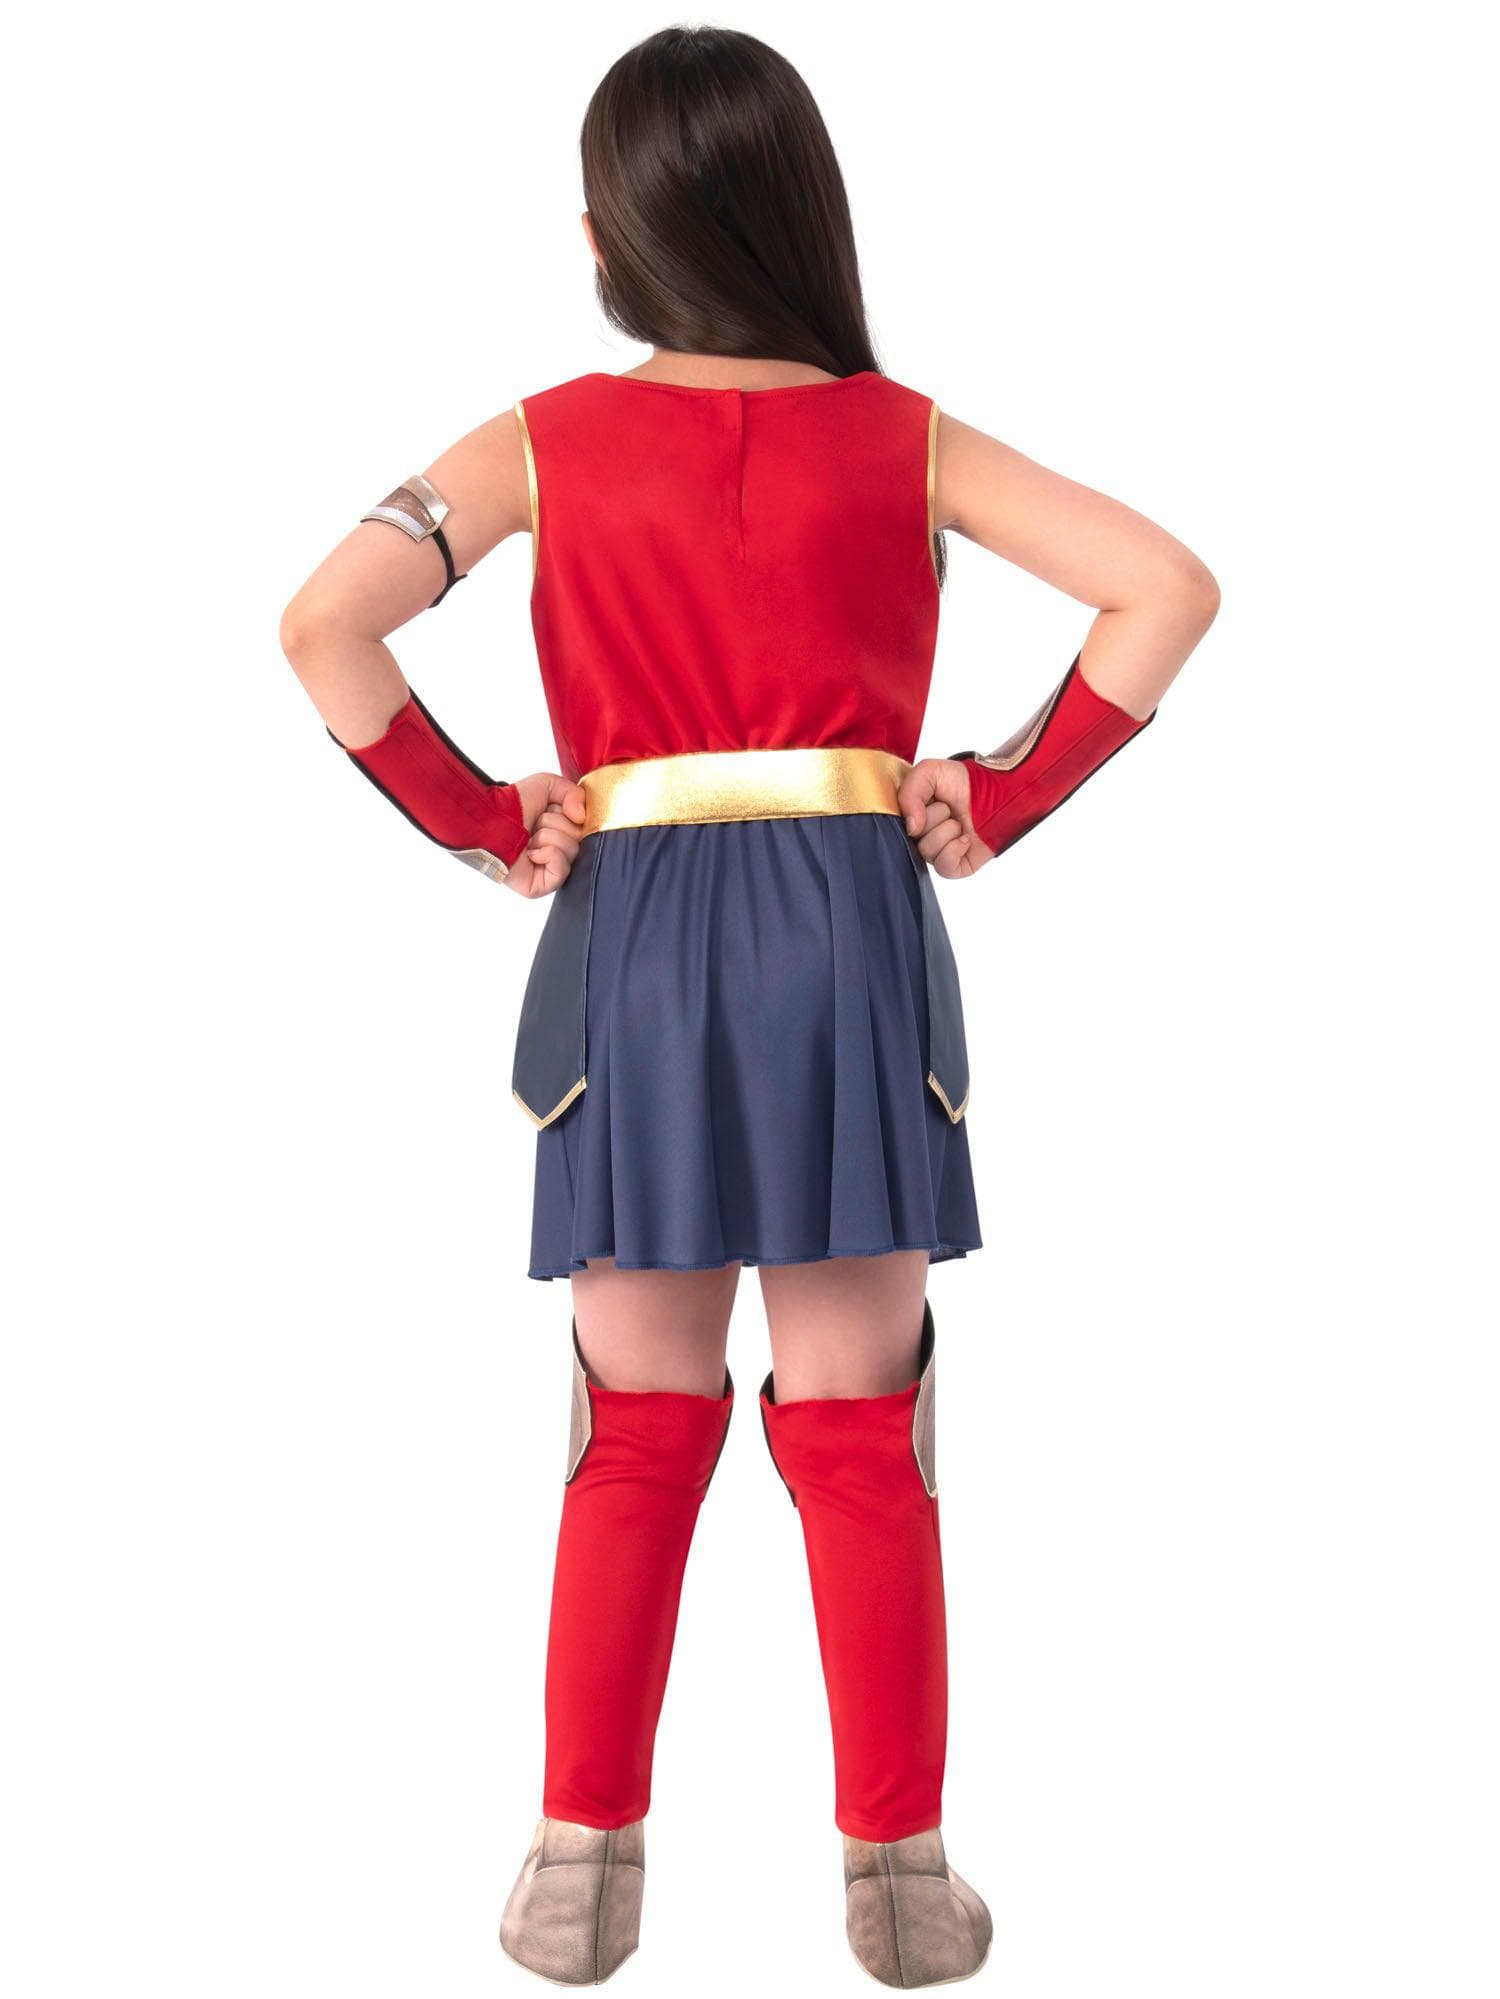 Kids Wonder Woman 1984 Wonder Woman Deluxe Costume - costumes.com